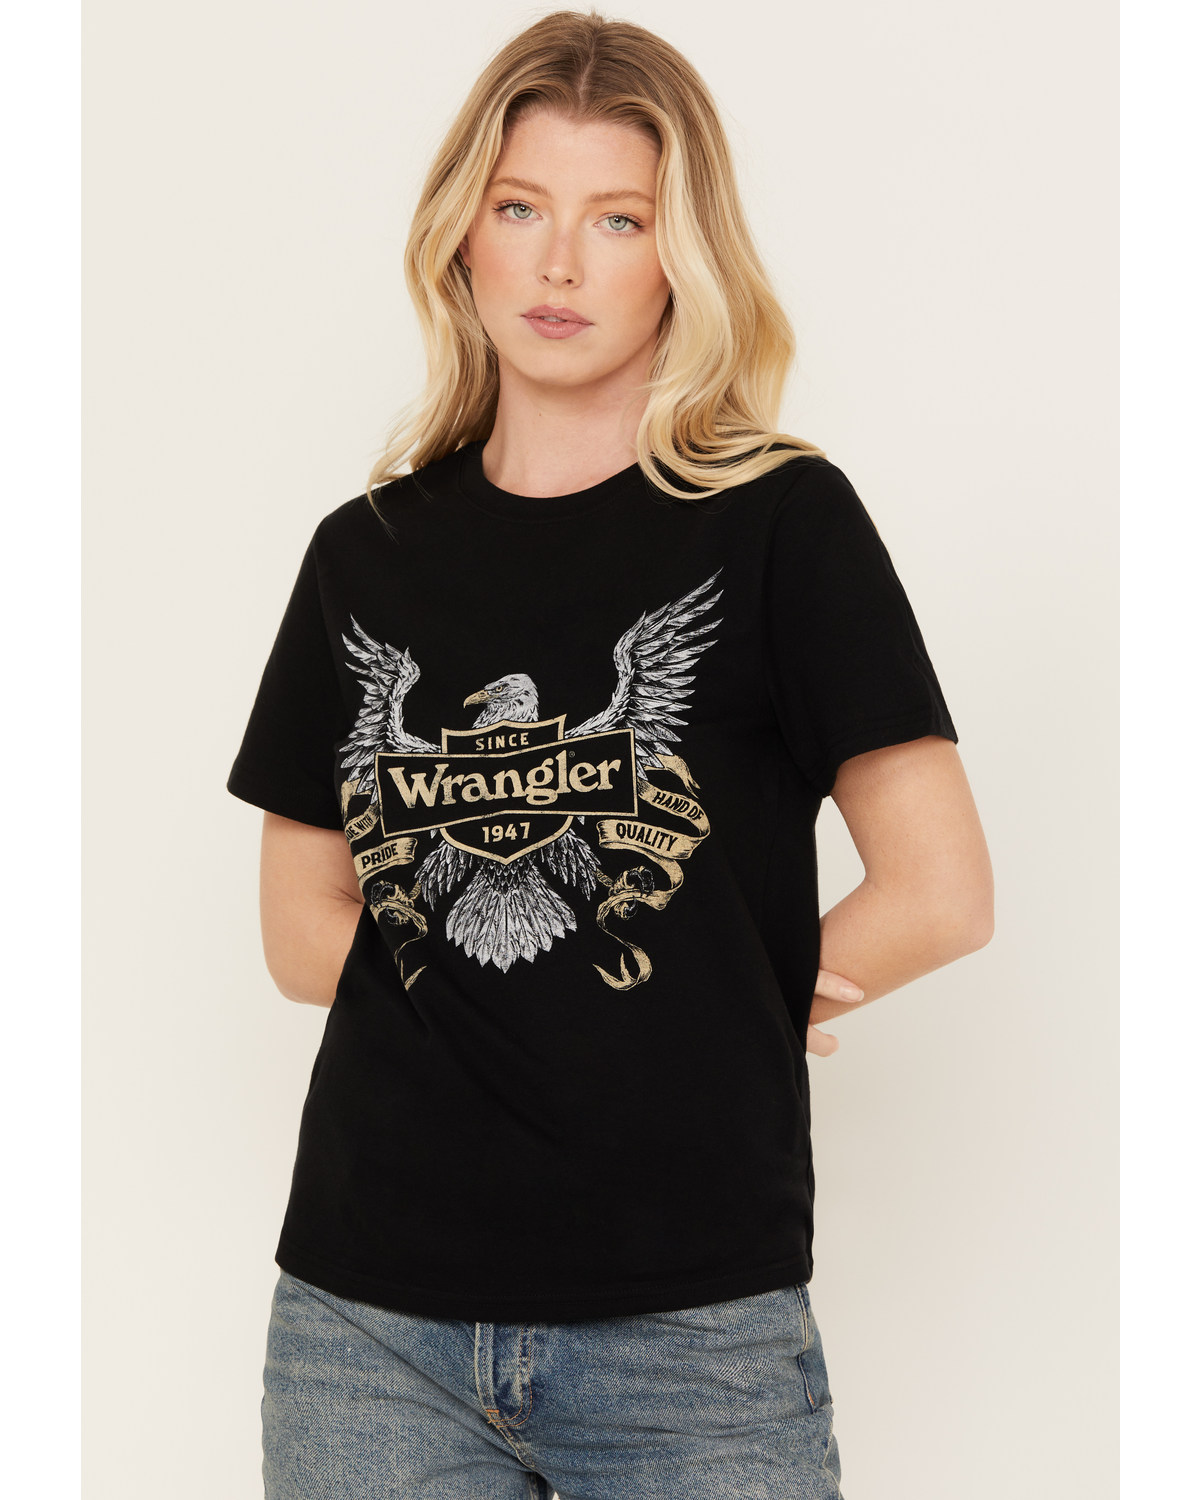 Wrangler Women's Eagle Logo Short Sleeve Graphic Tee